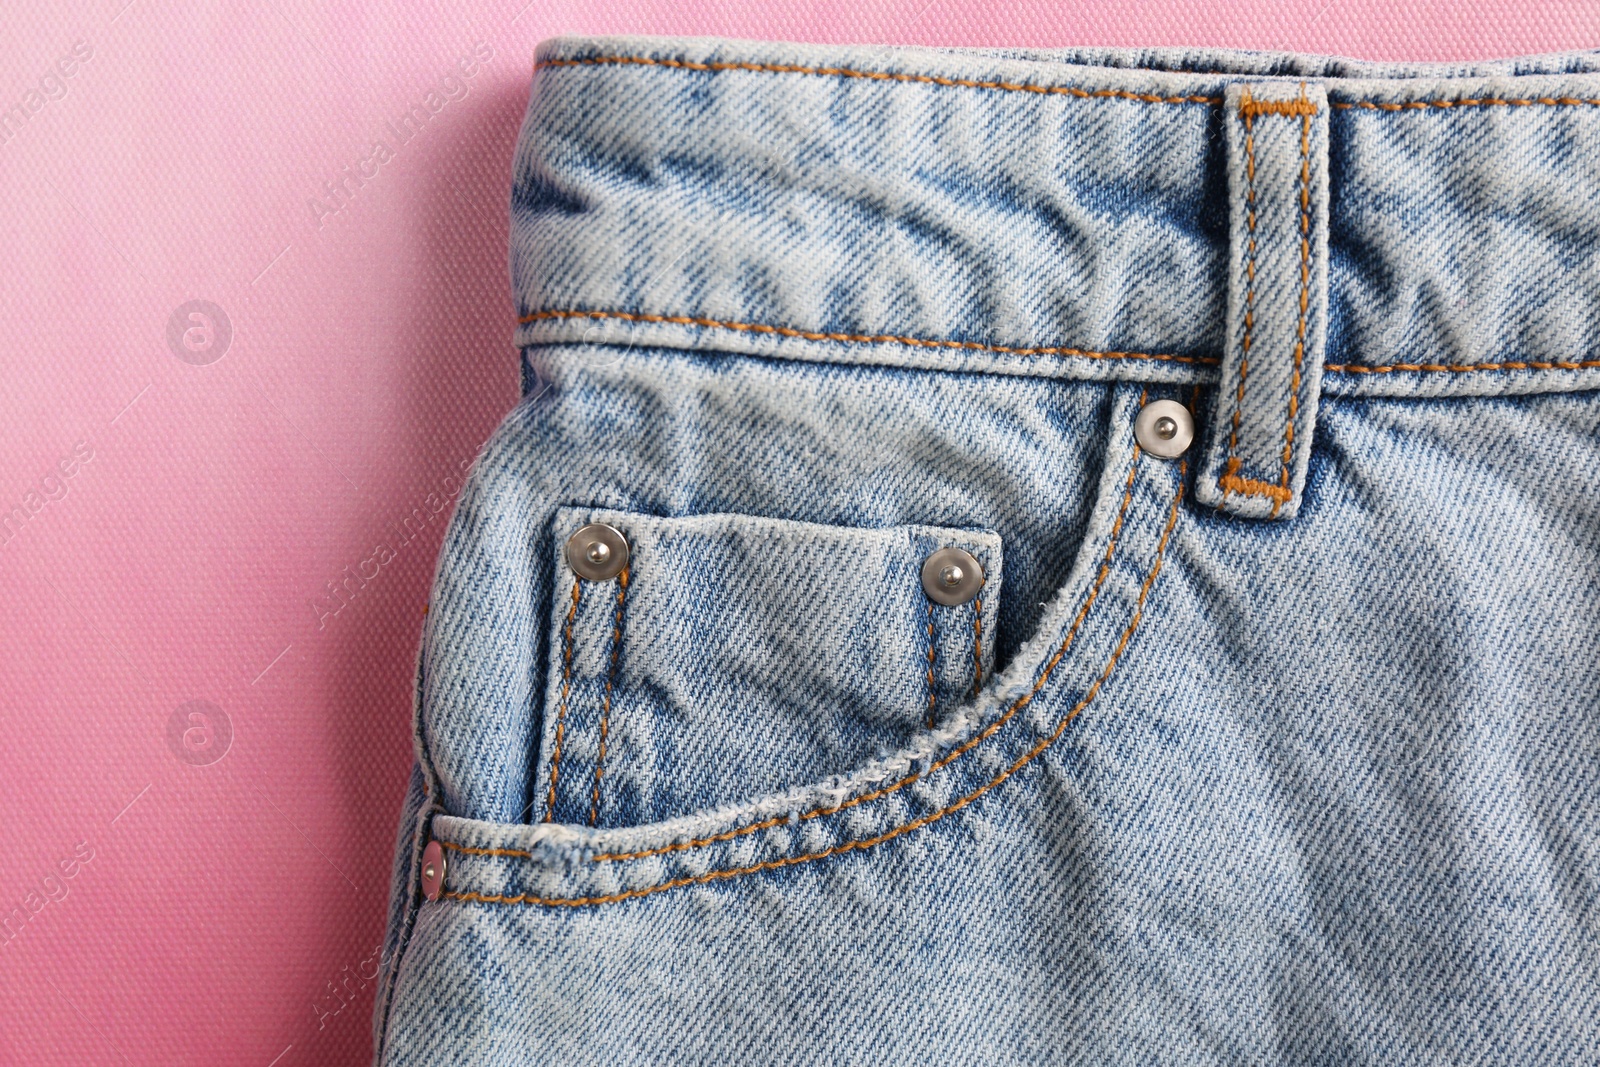 Photo of Stylish light blue jeans on pink background, closeup of inset pocket